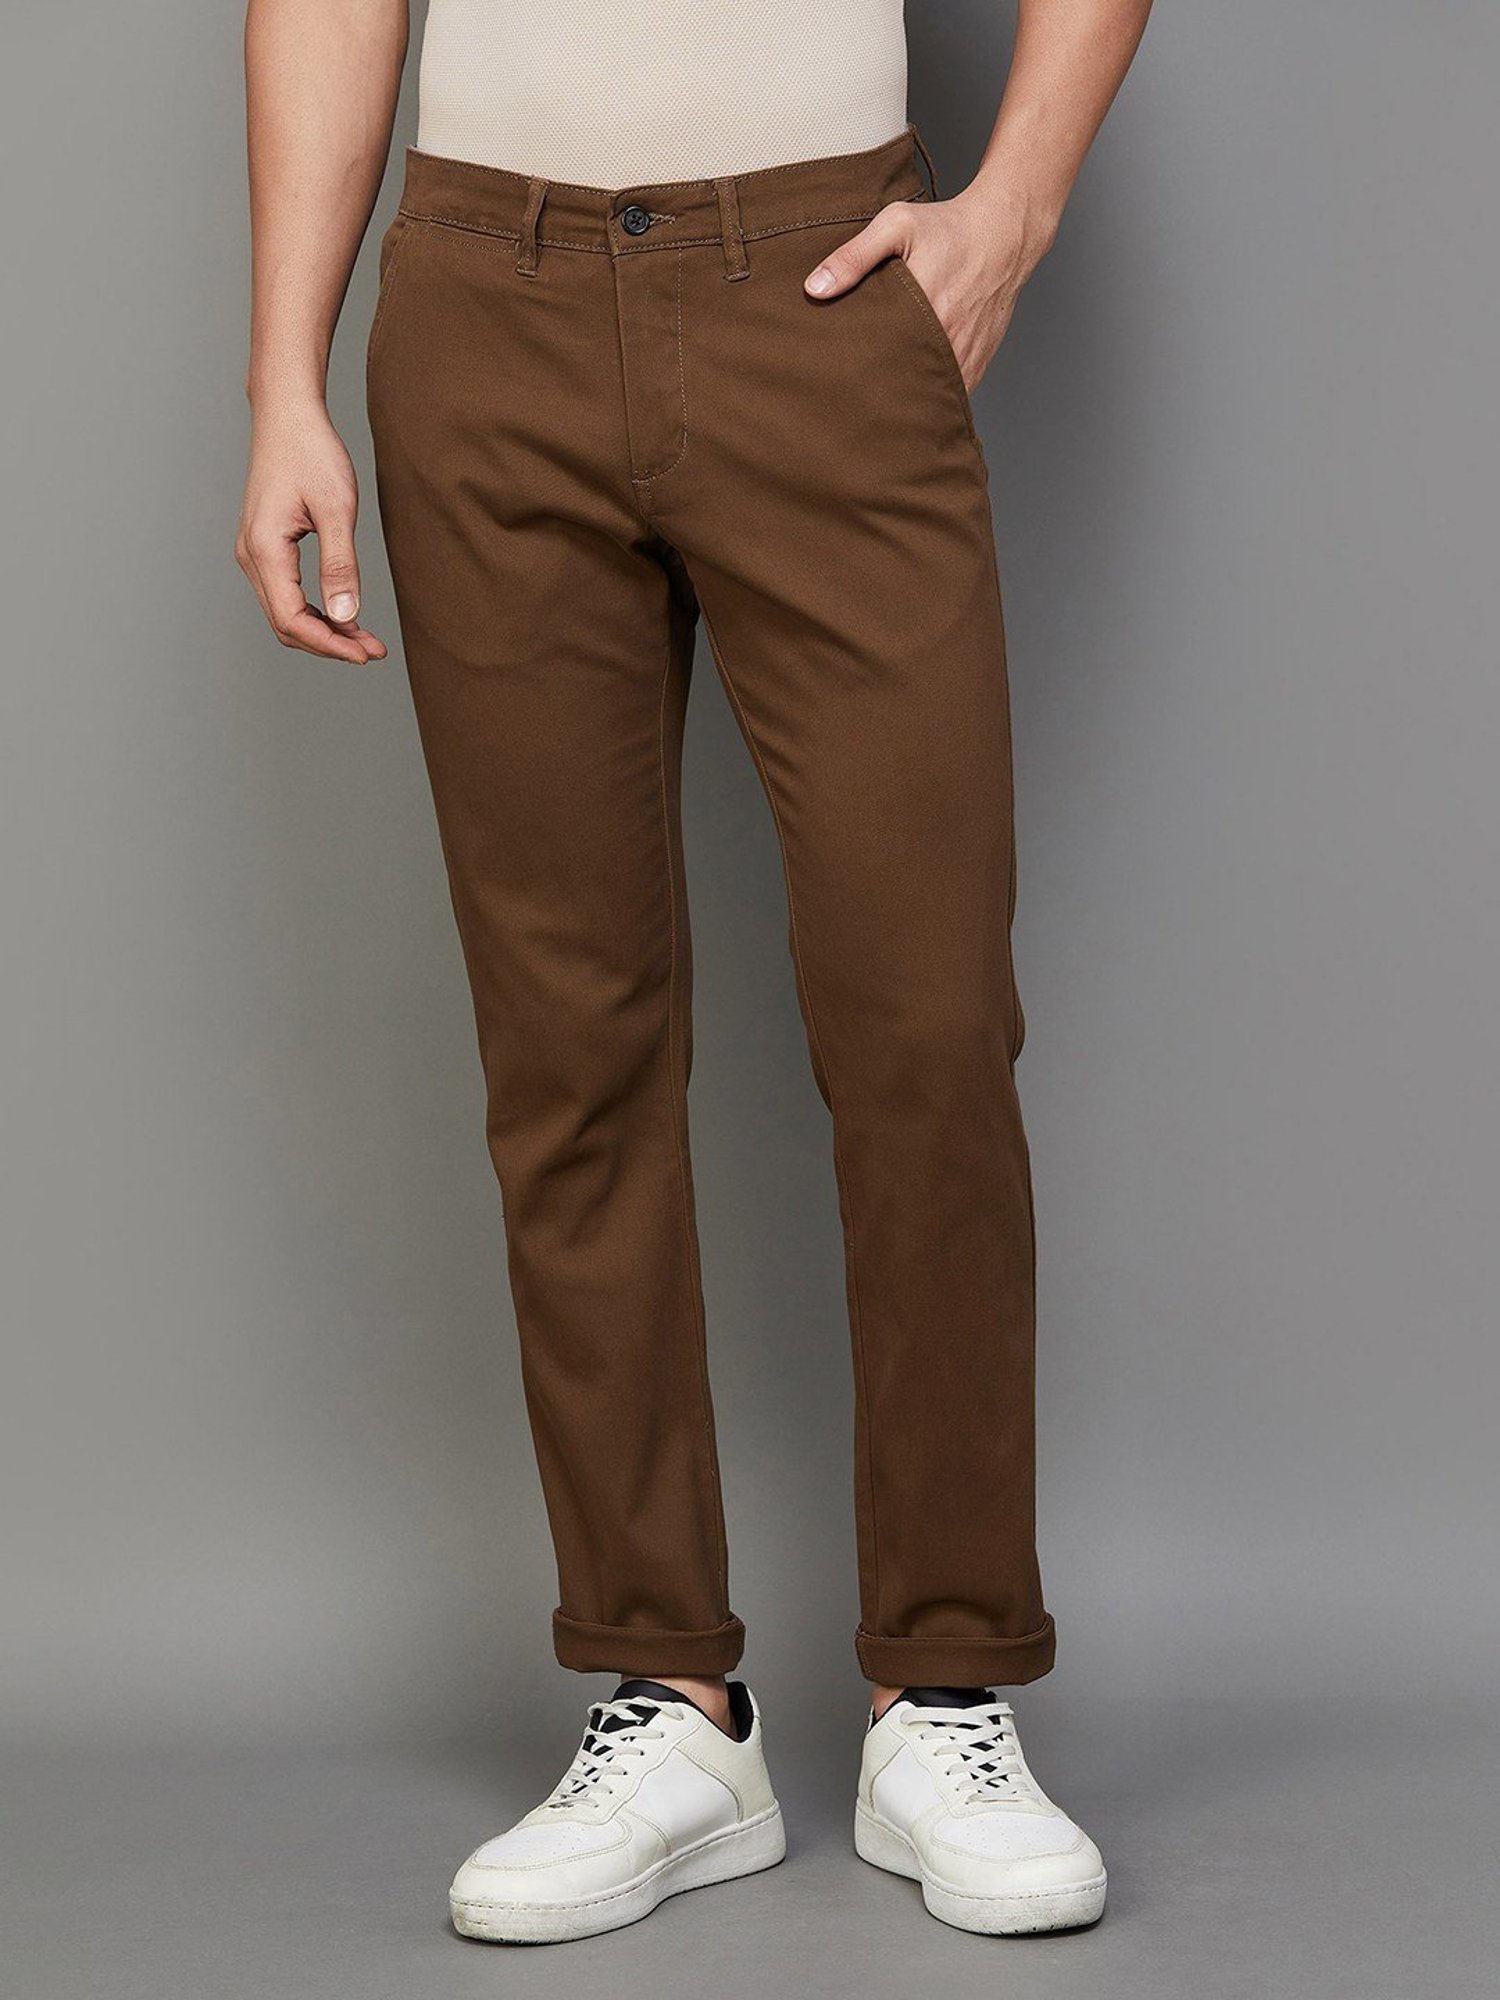 Men's Brown Pants | Levi's® US